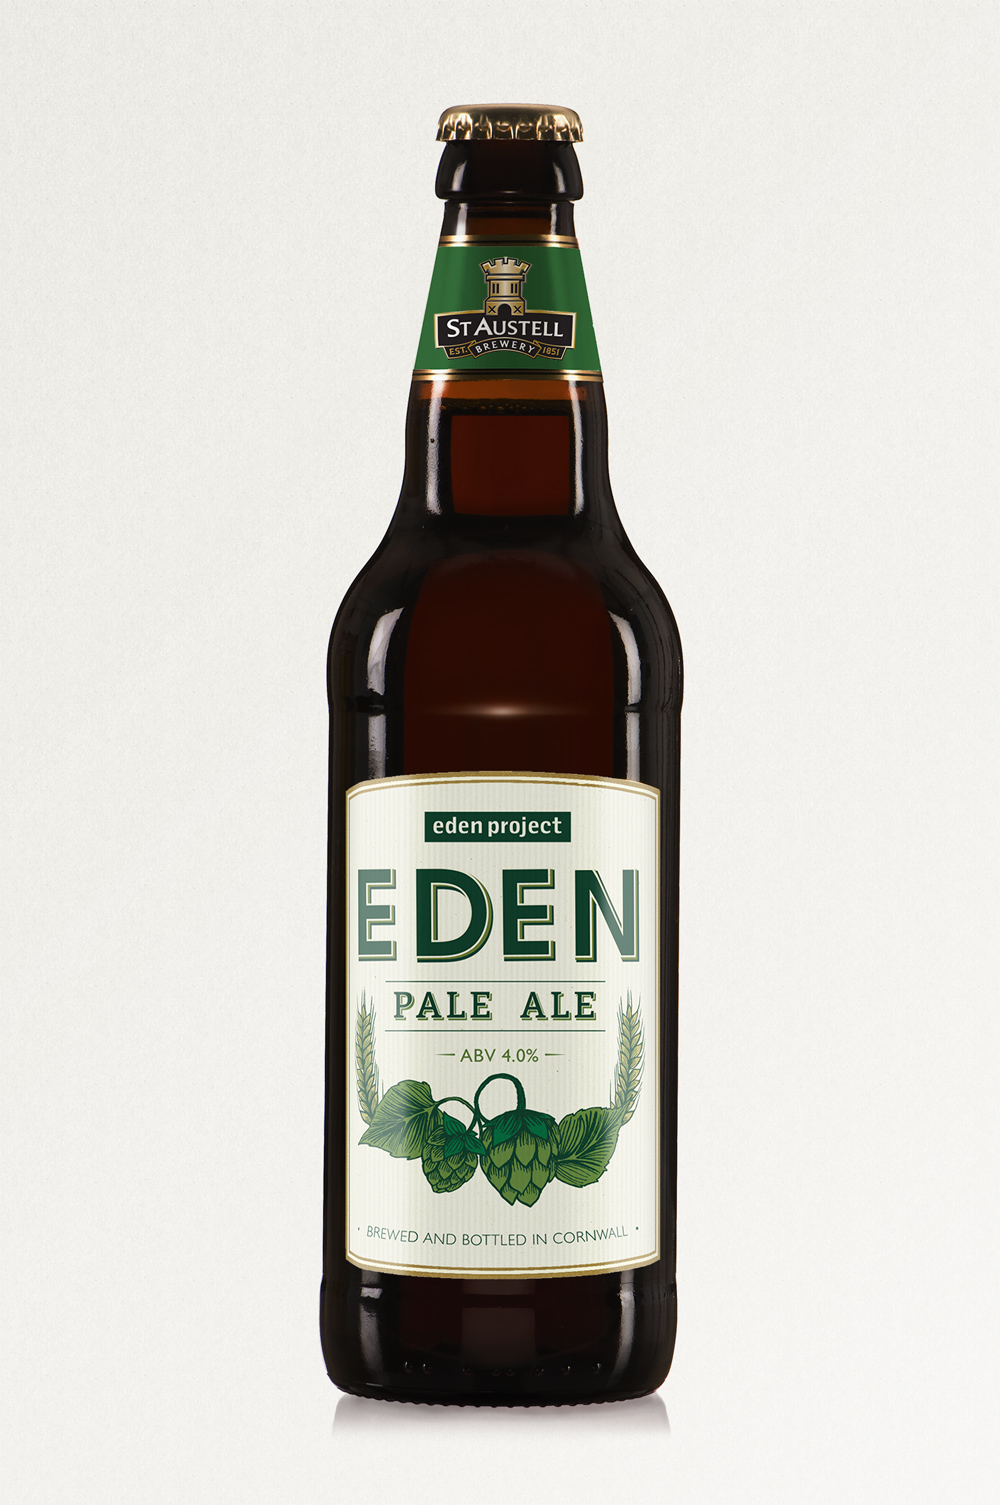 Eden Beer, St Austell Brewery, pale ale, bottle label design